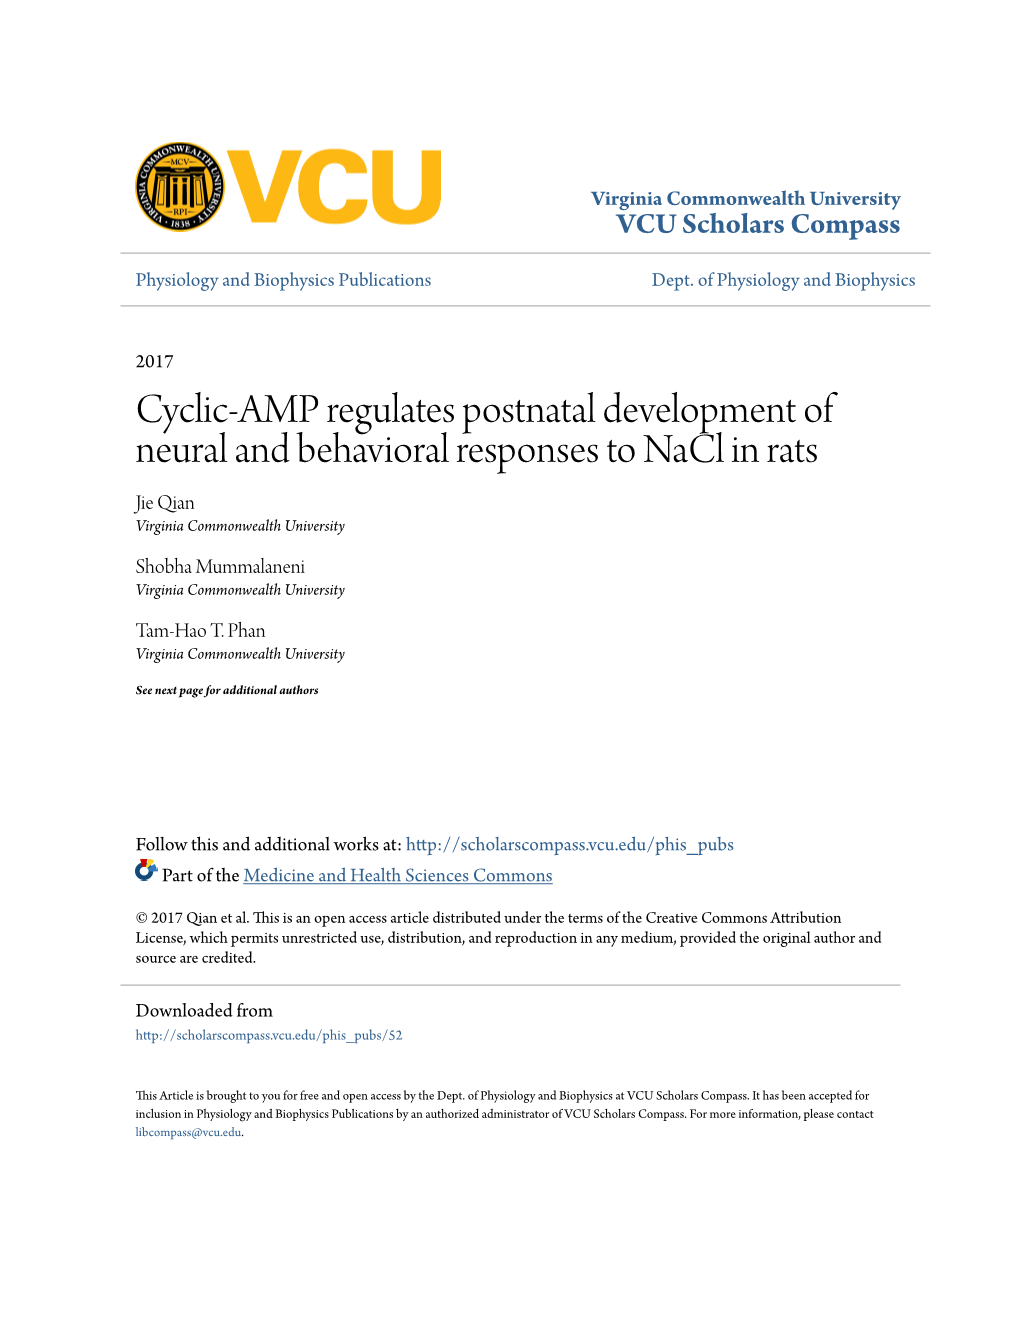 Cyclic-AMP Regulates Postnatal Development of Neural and Behavioral Responses to Nacl in Rats Jie Qian Virginia Commonwealth University